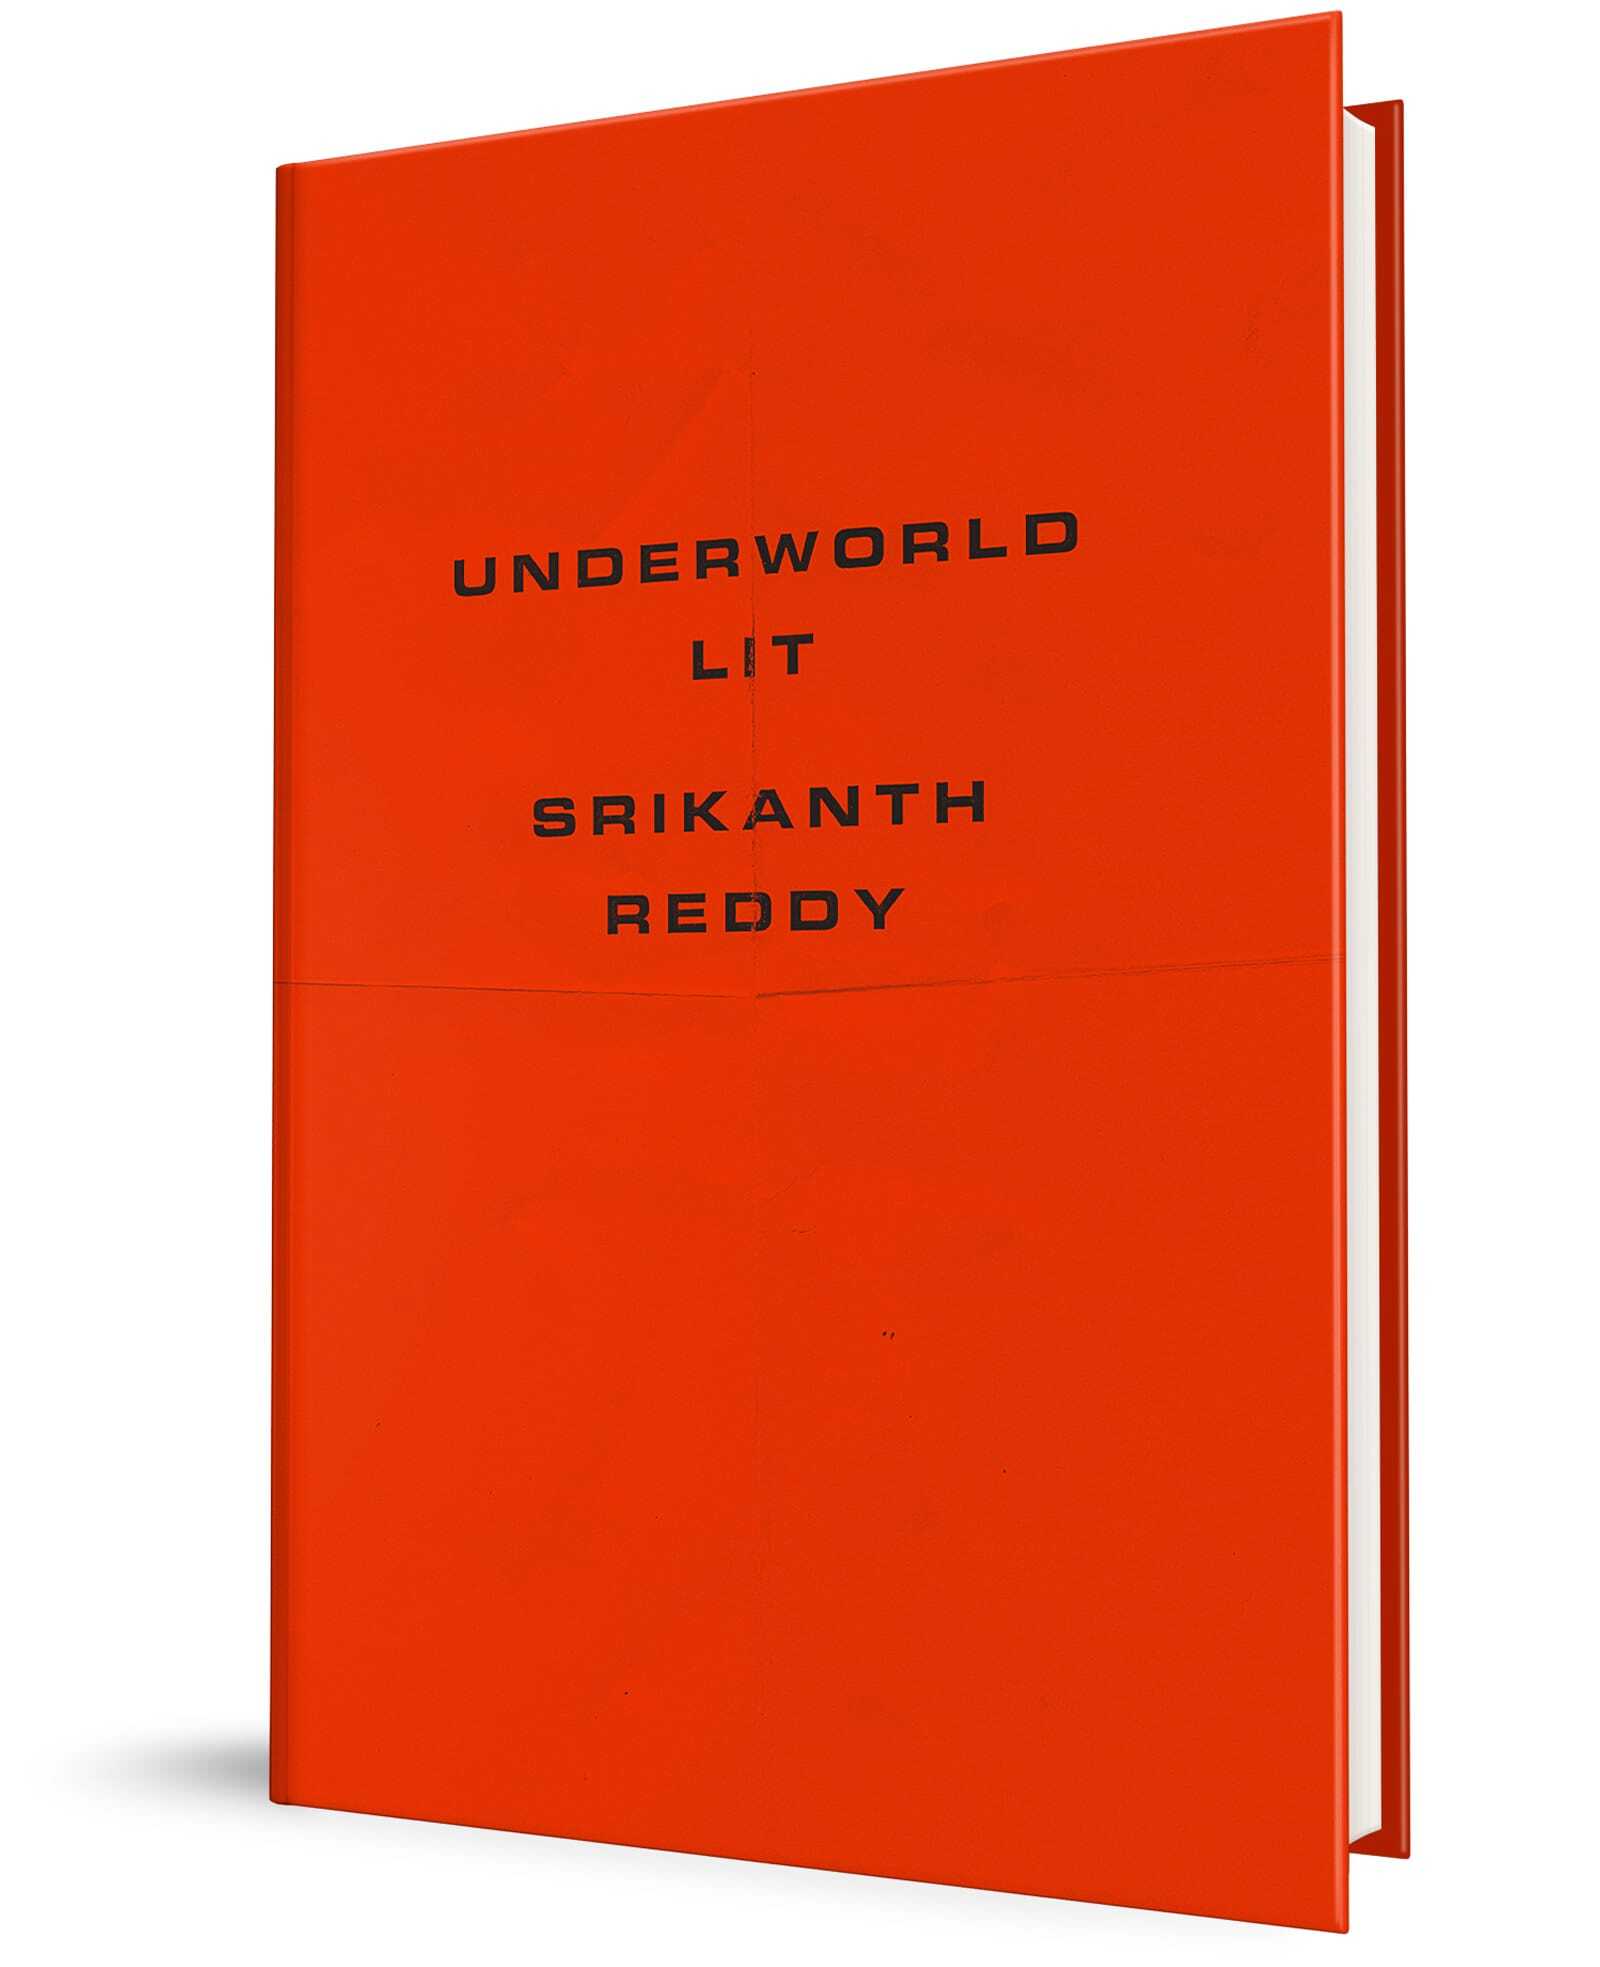 Cover of Underworld Lit by Srikanth Reddy